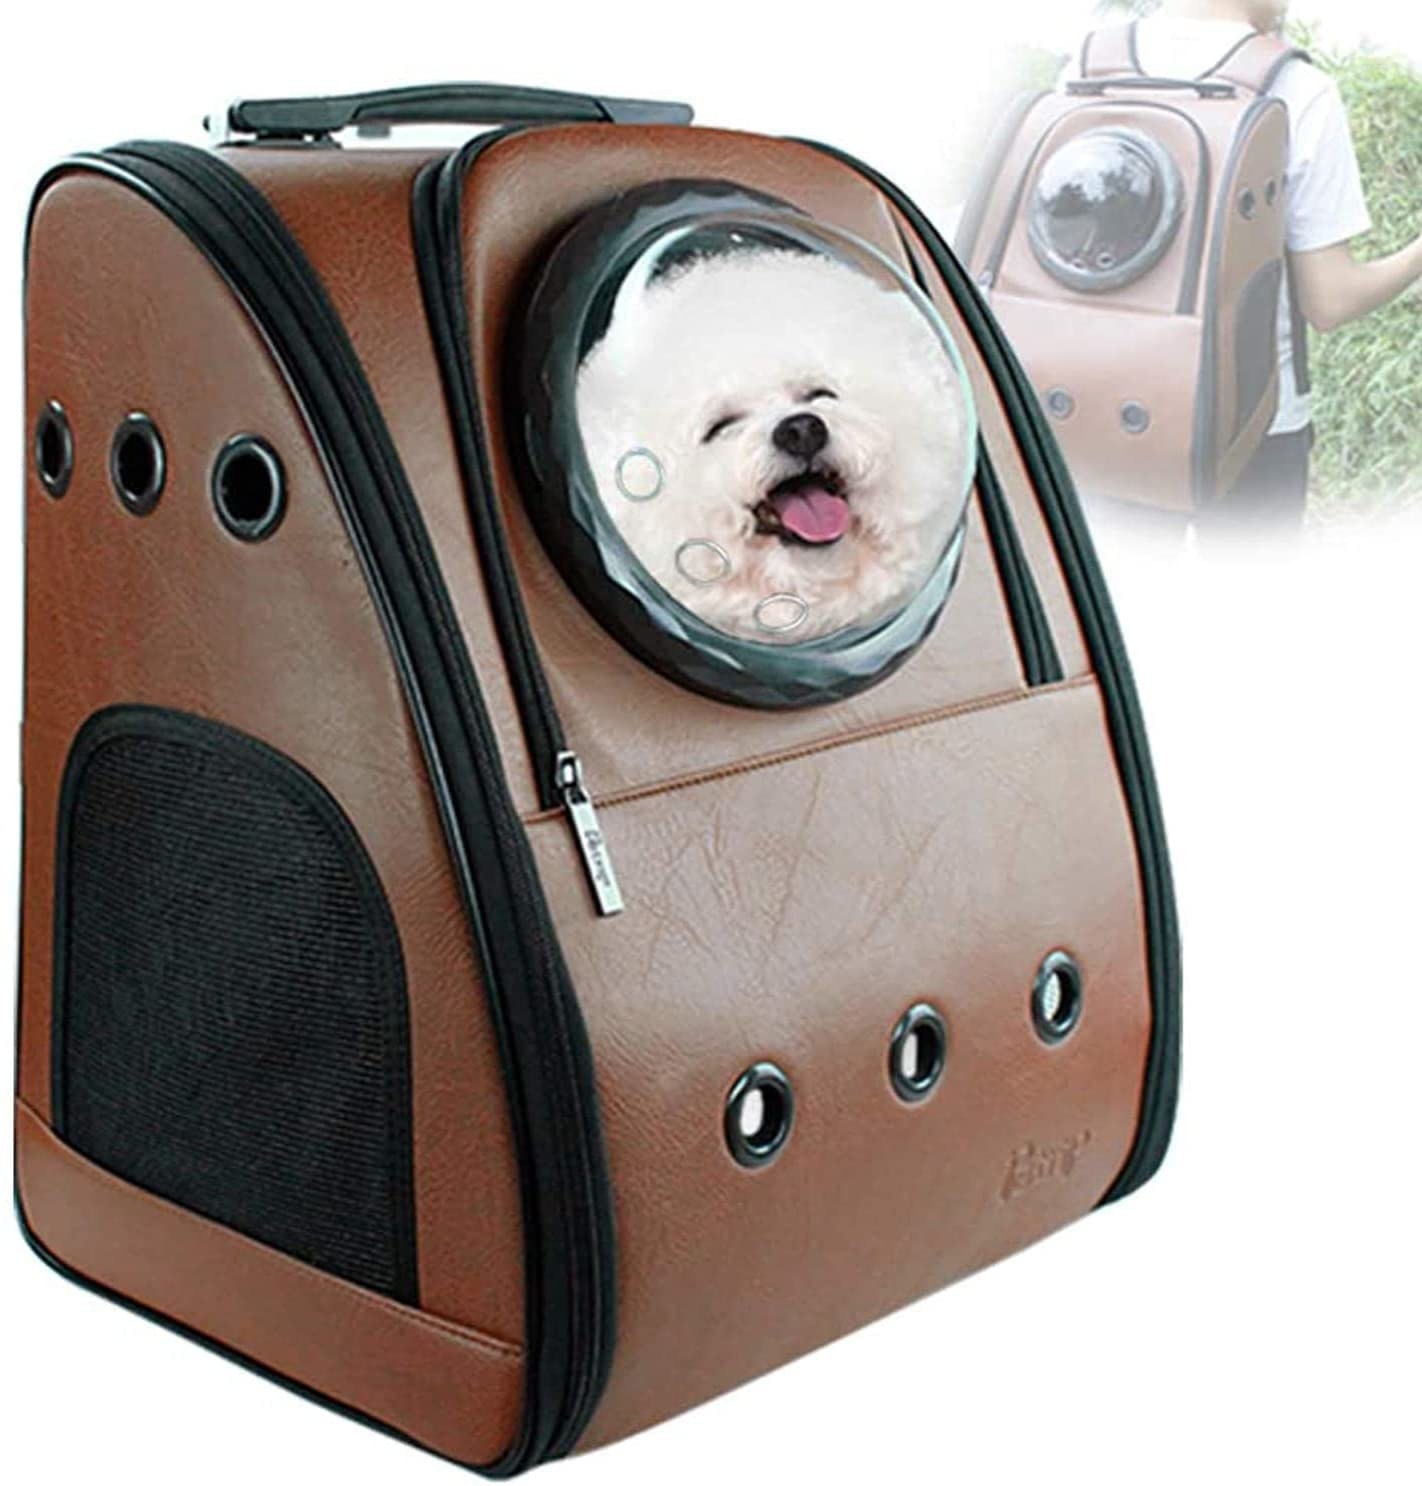 Dog in backpack 